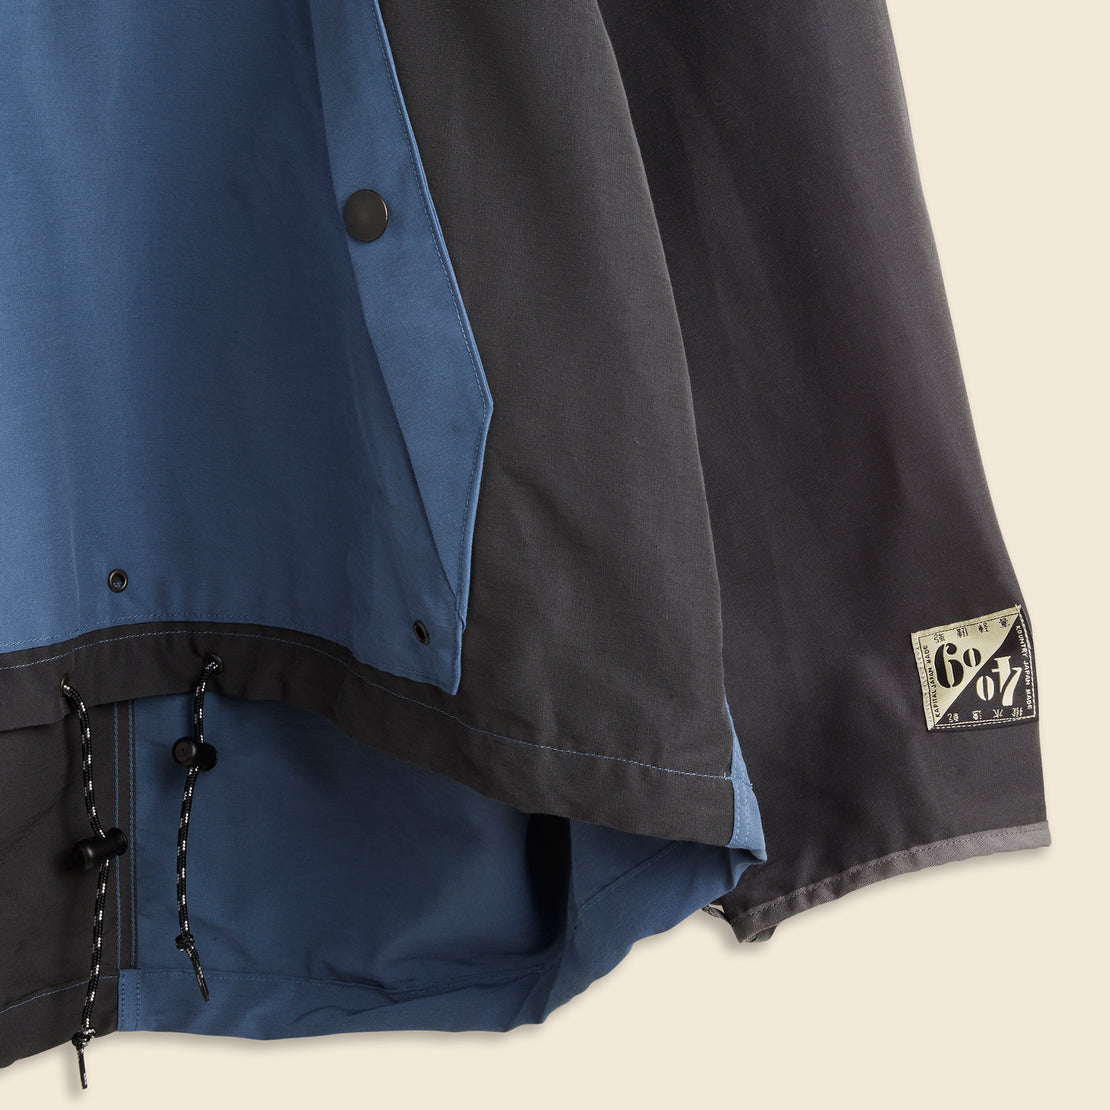 60/40Cloth x TUGIHAGI Fleece HUTTE Anorak - Navy - Kapital - STAG Provisions - W - Outerwear - Coat/Jacket